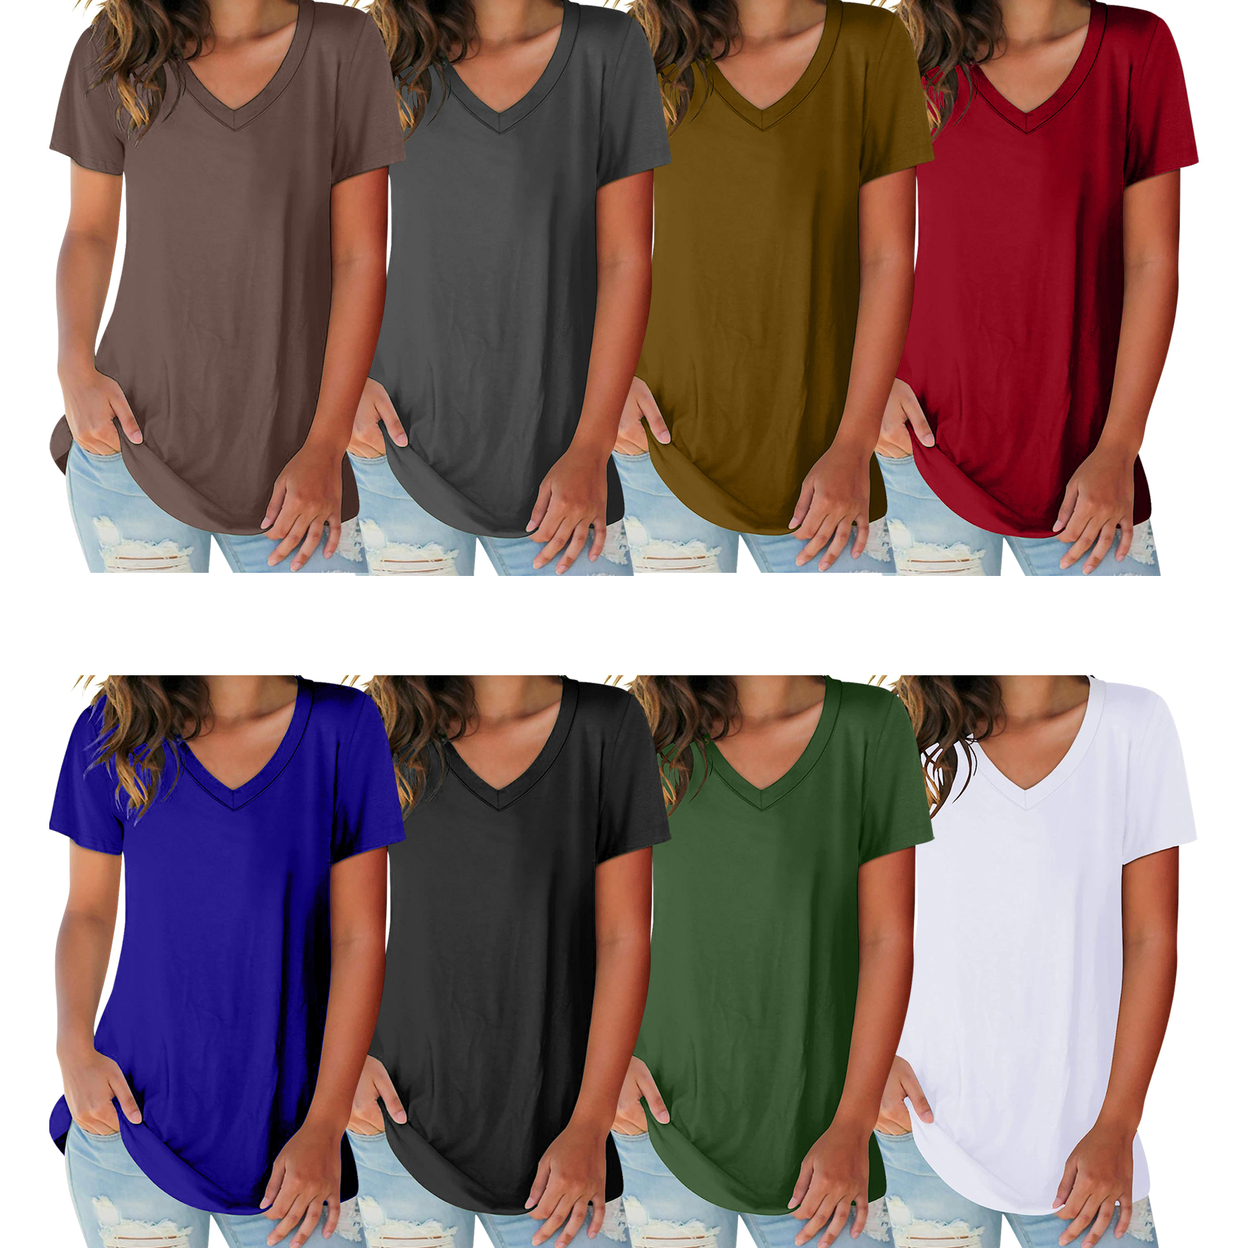 3-Pack: Women's Ultra Soft Smooth Cotton Blend Basic V-Neck Short Sleeve Shirts - Black, White Mustard, Small